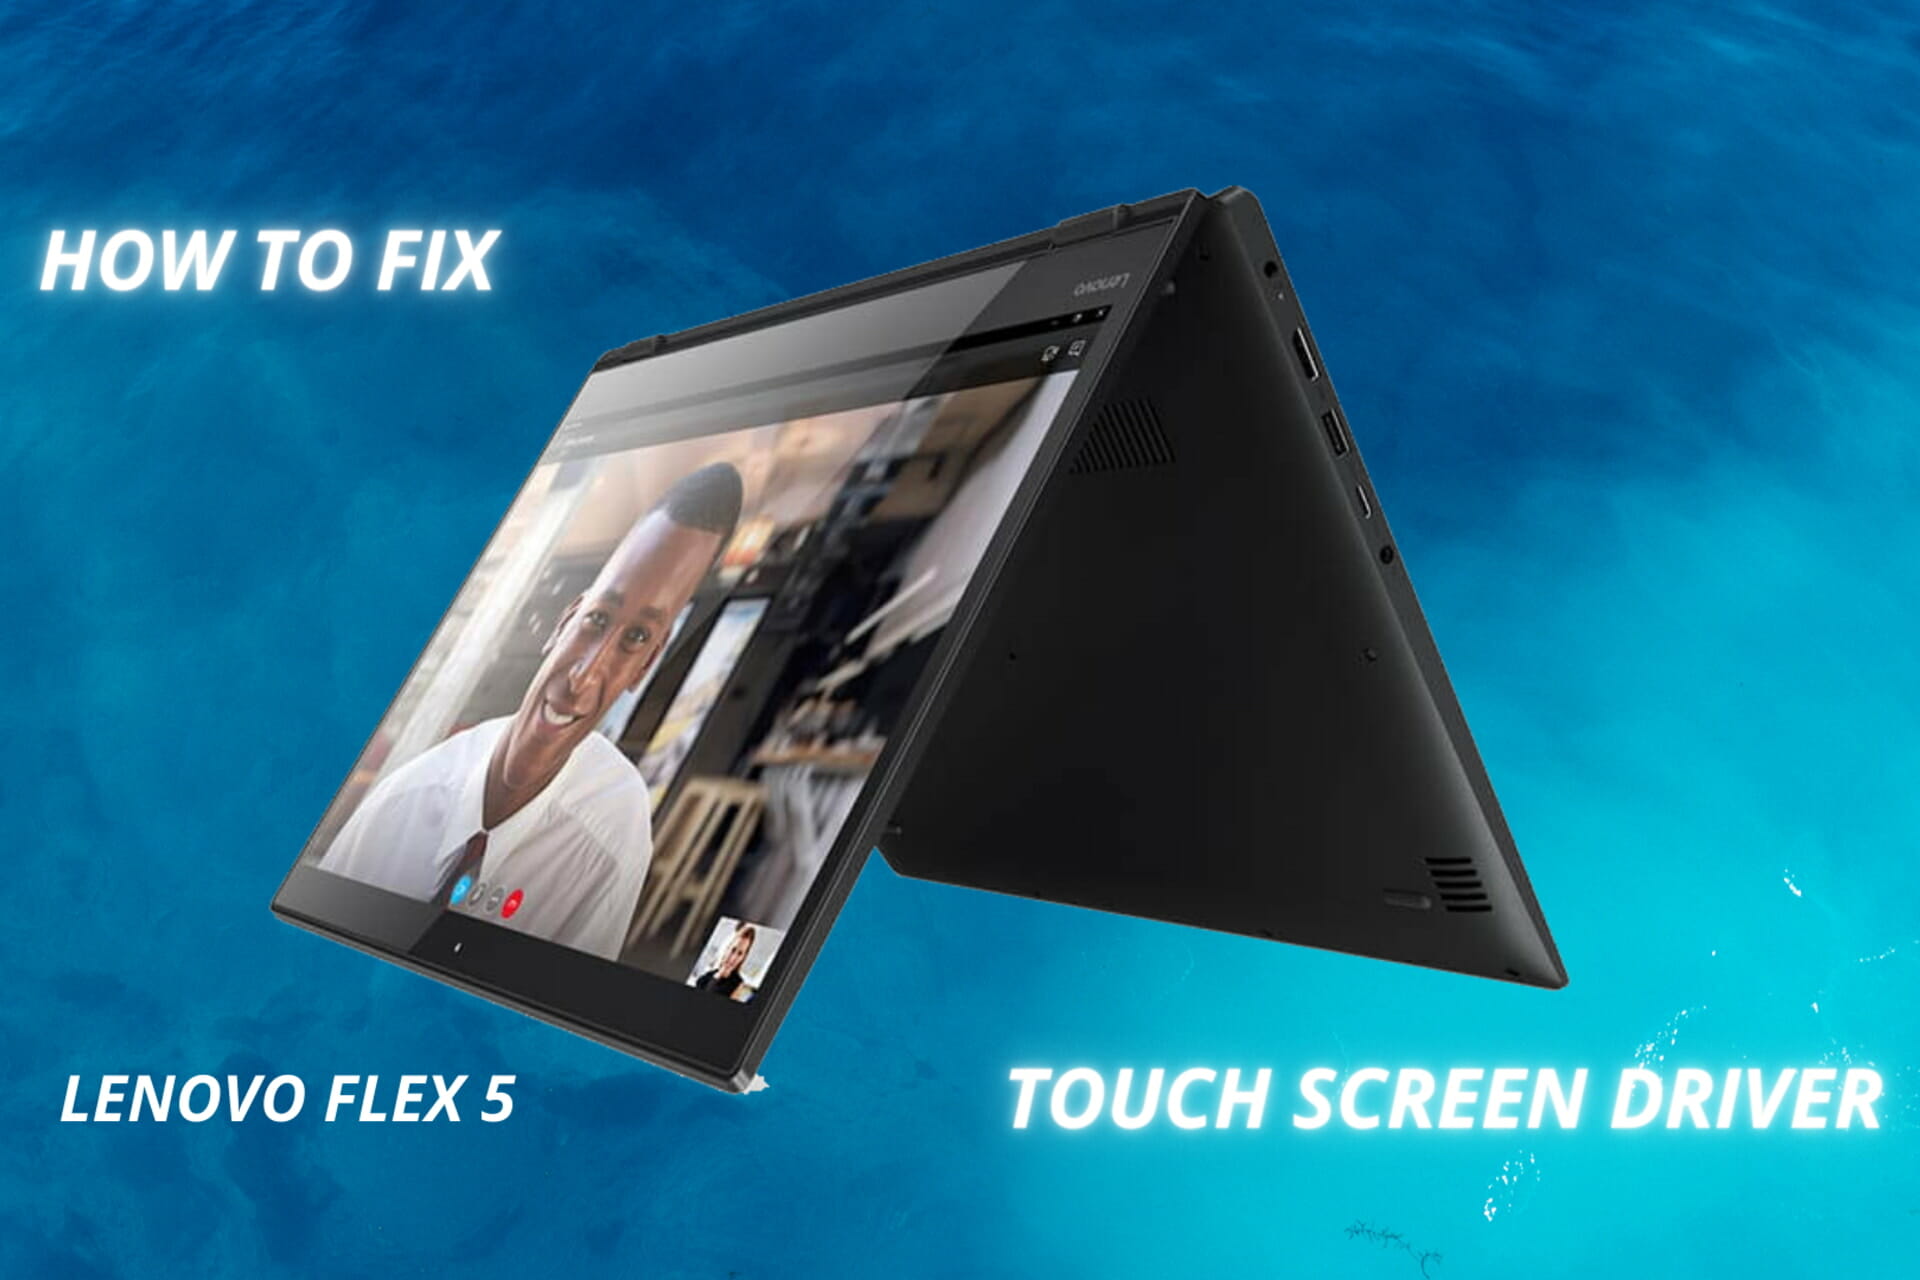 Lenovo Flex 5 touch screen driver not working